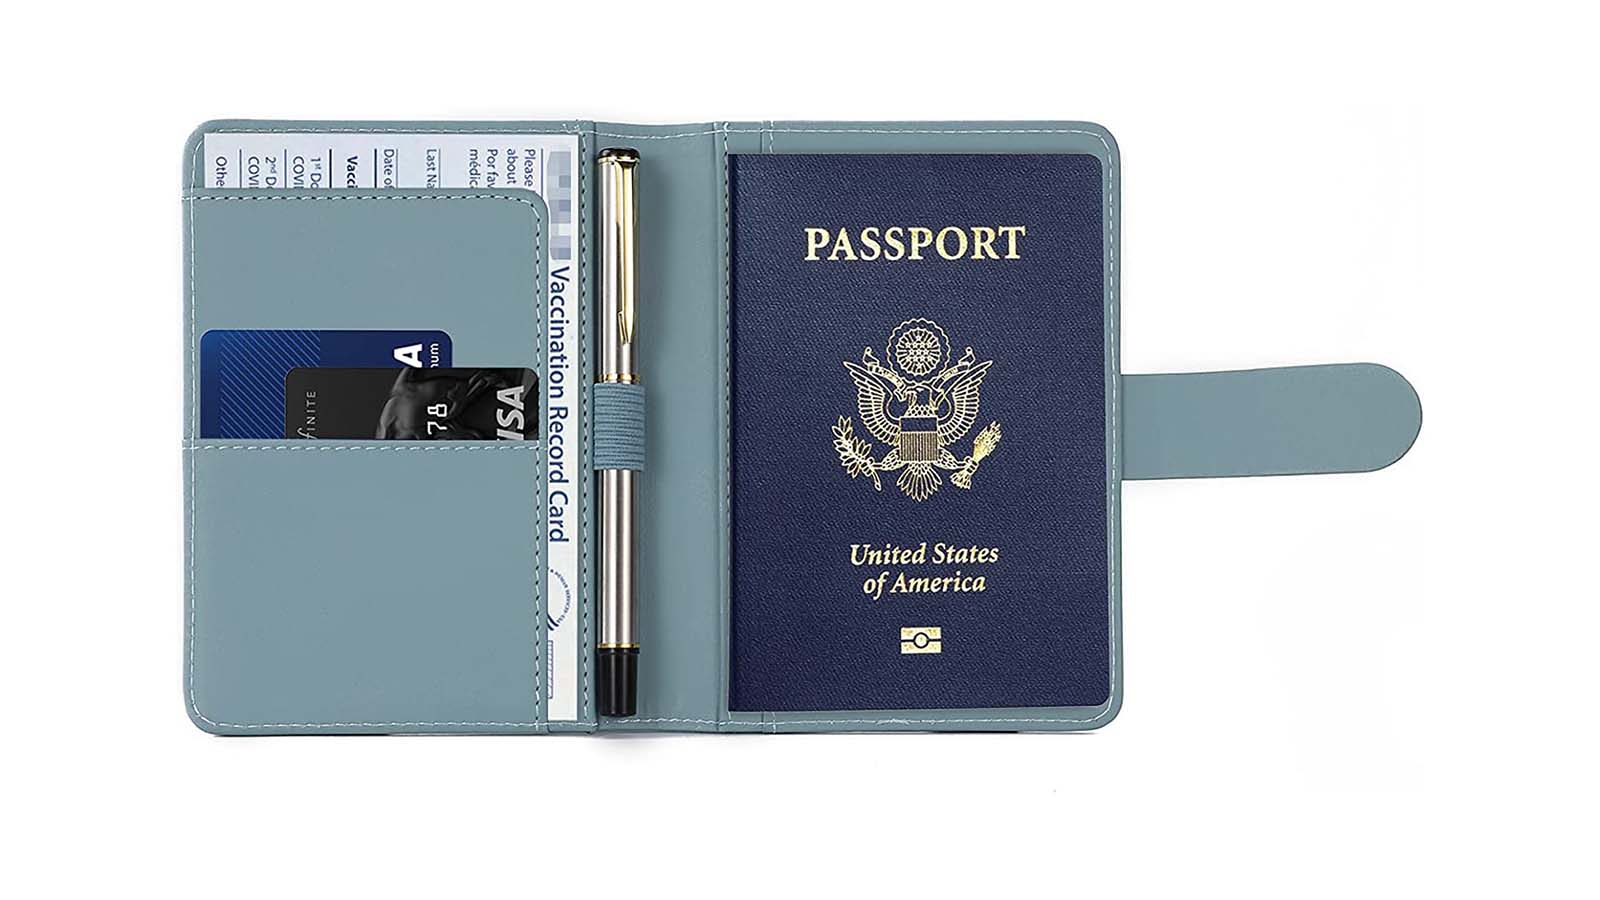 LOUIS VUITTON Passport Cover Review